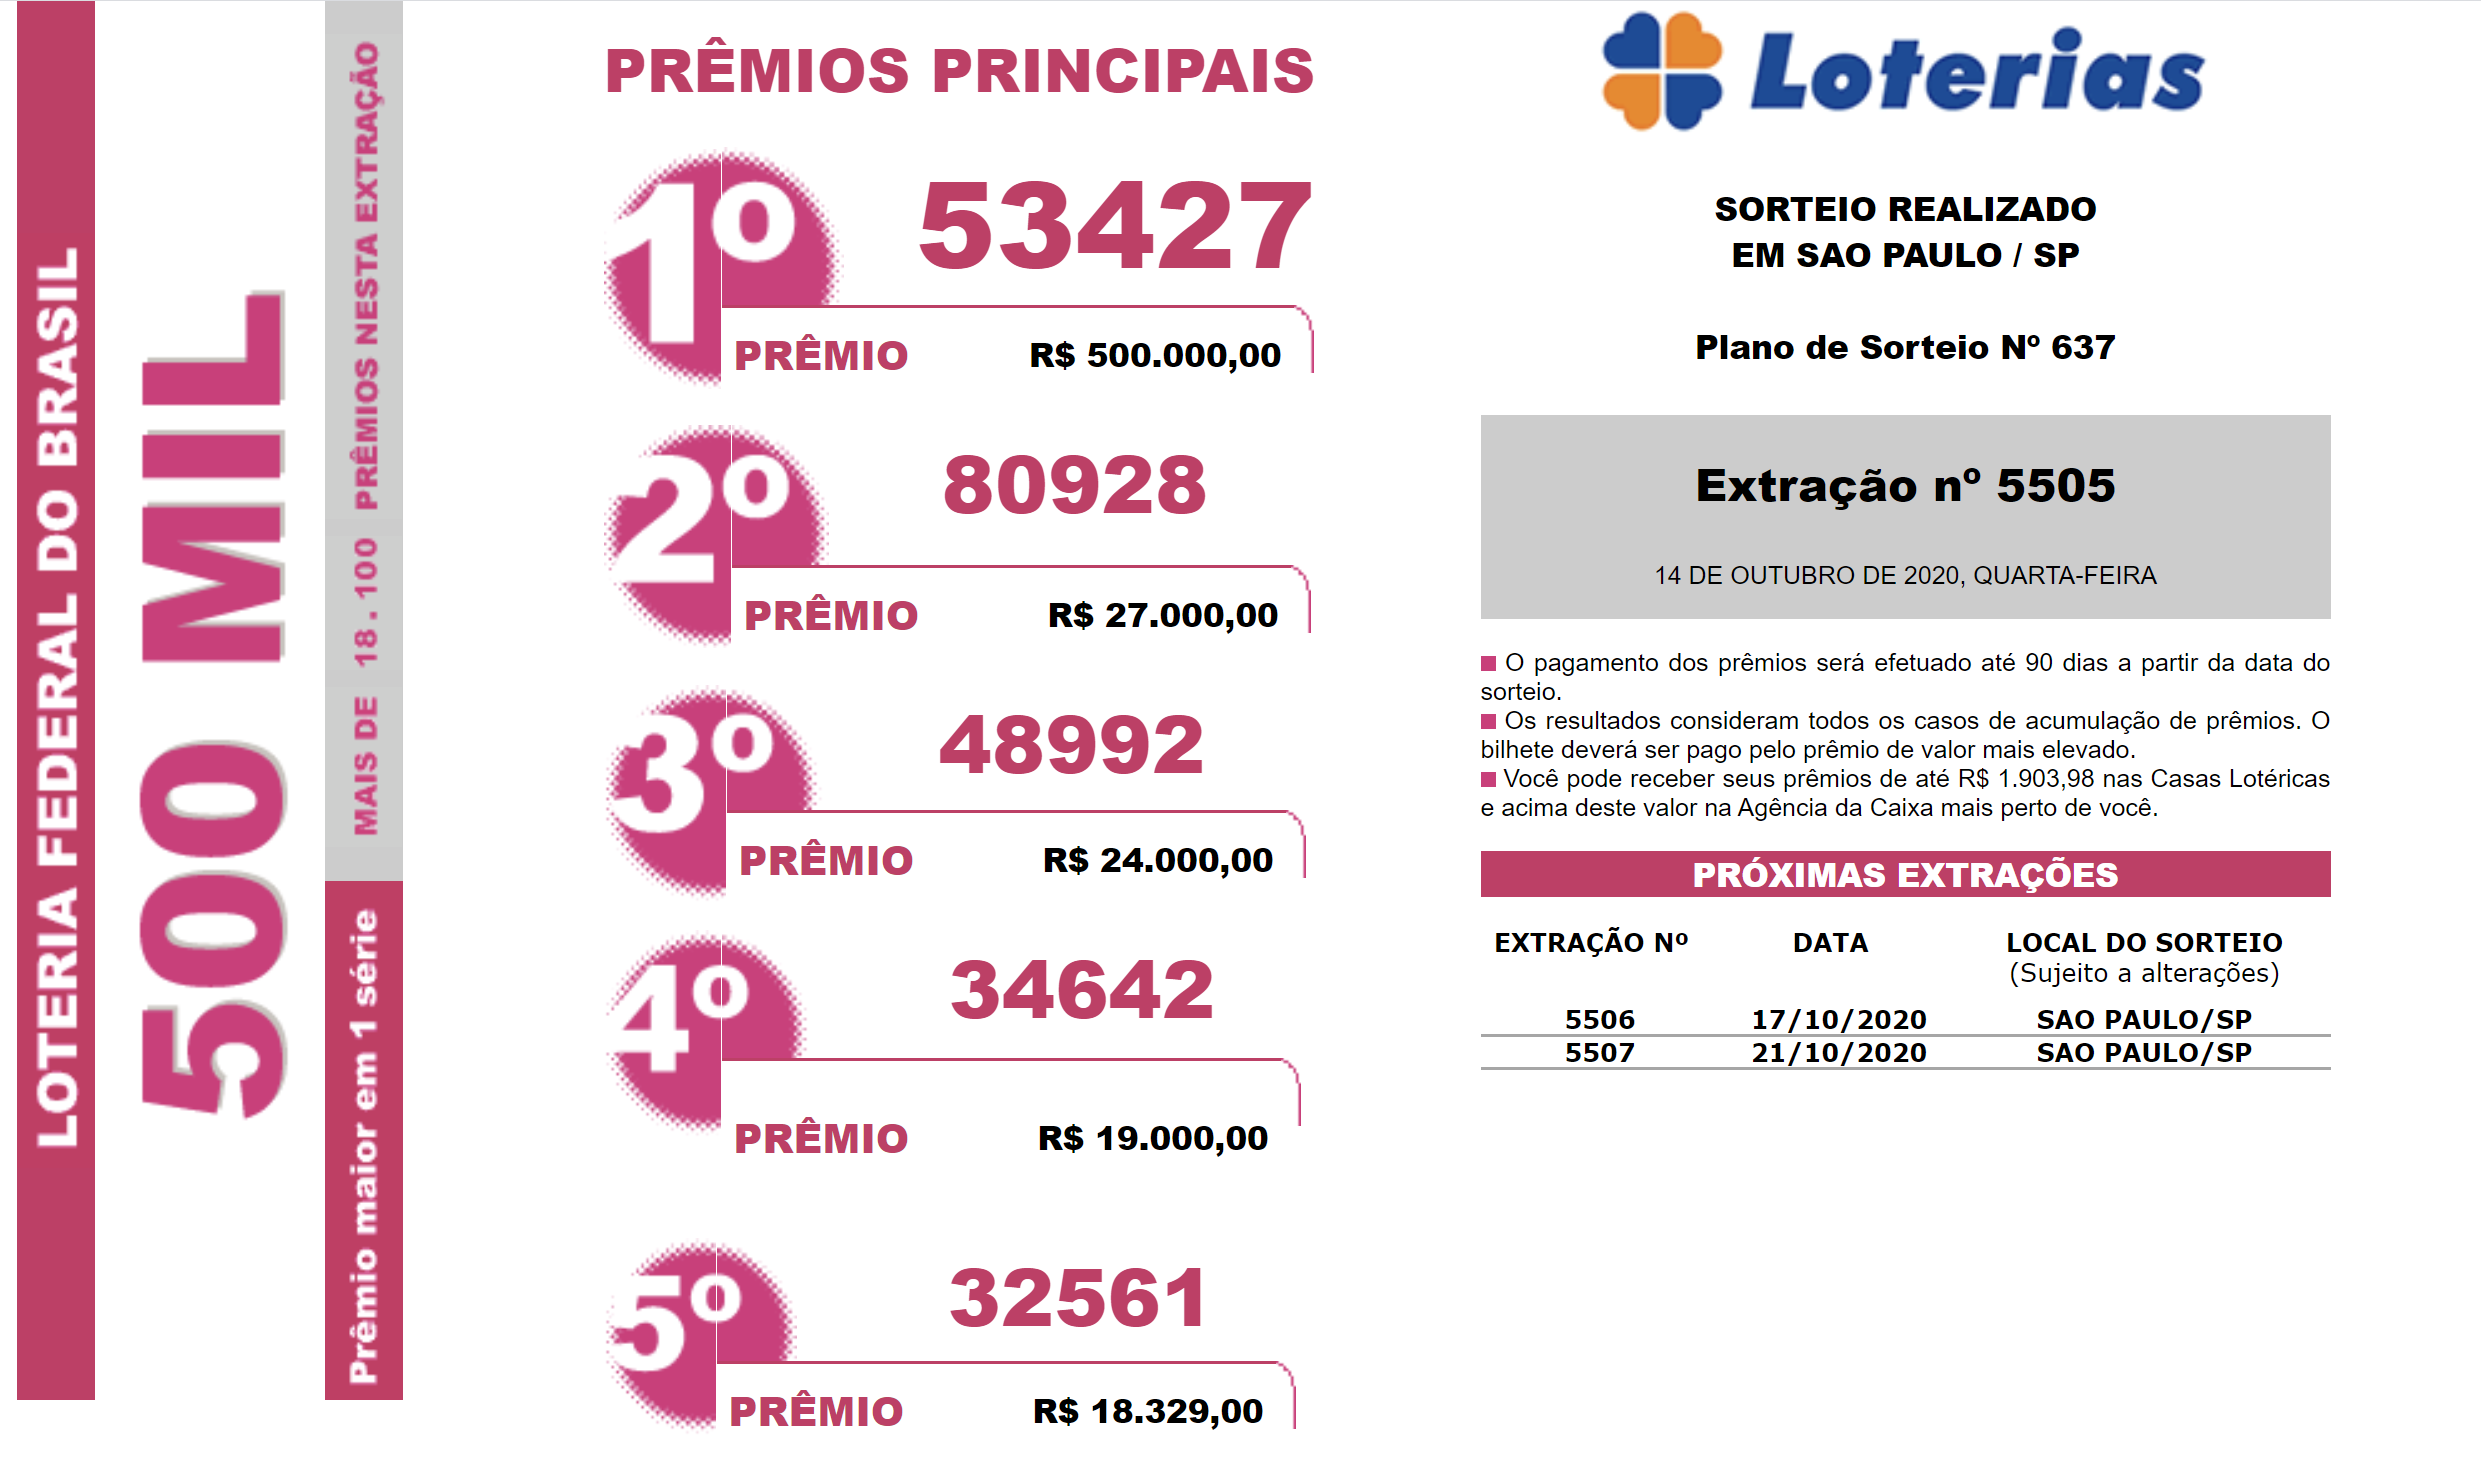 portal loterias online